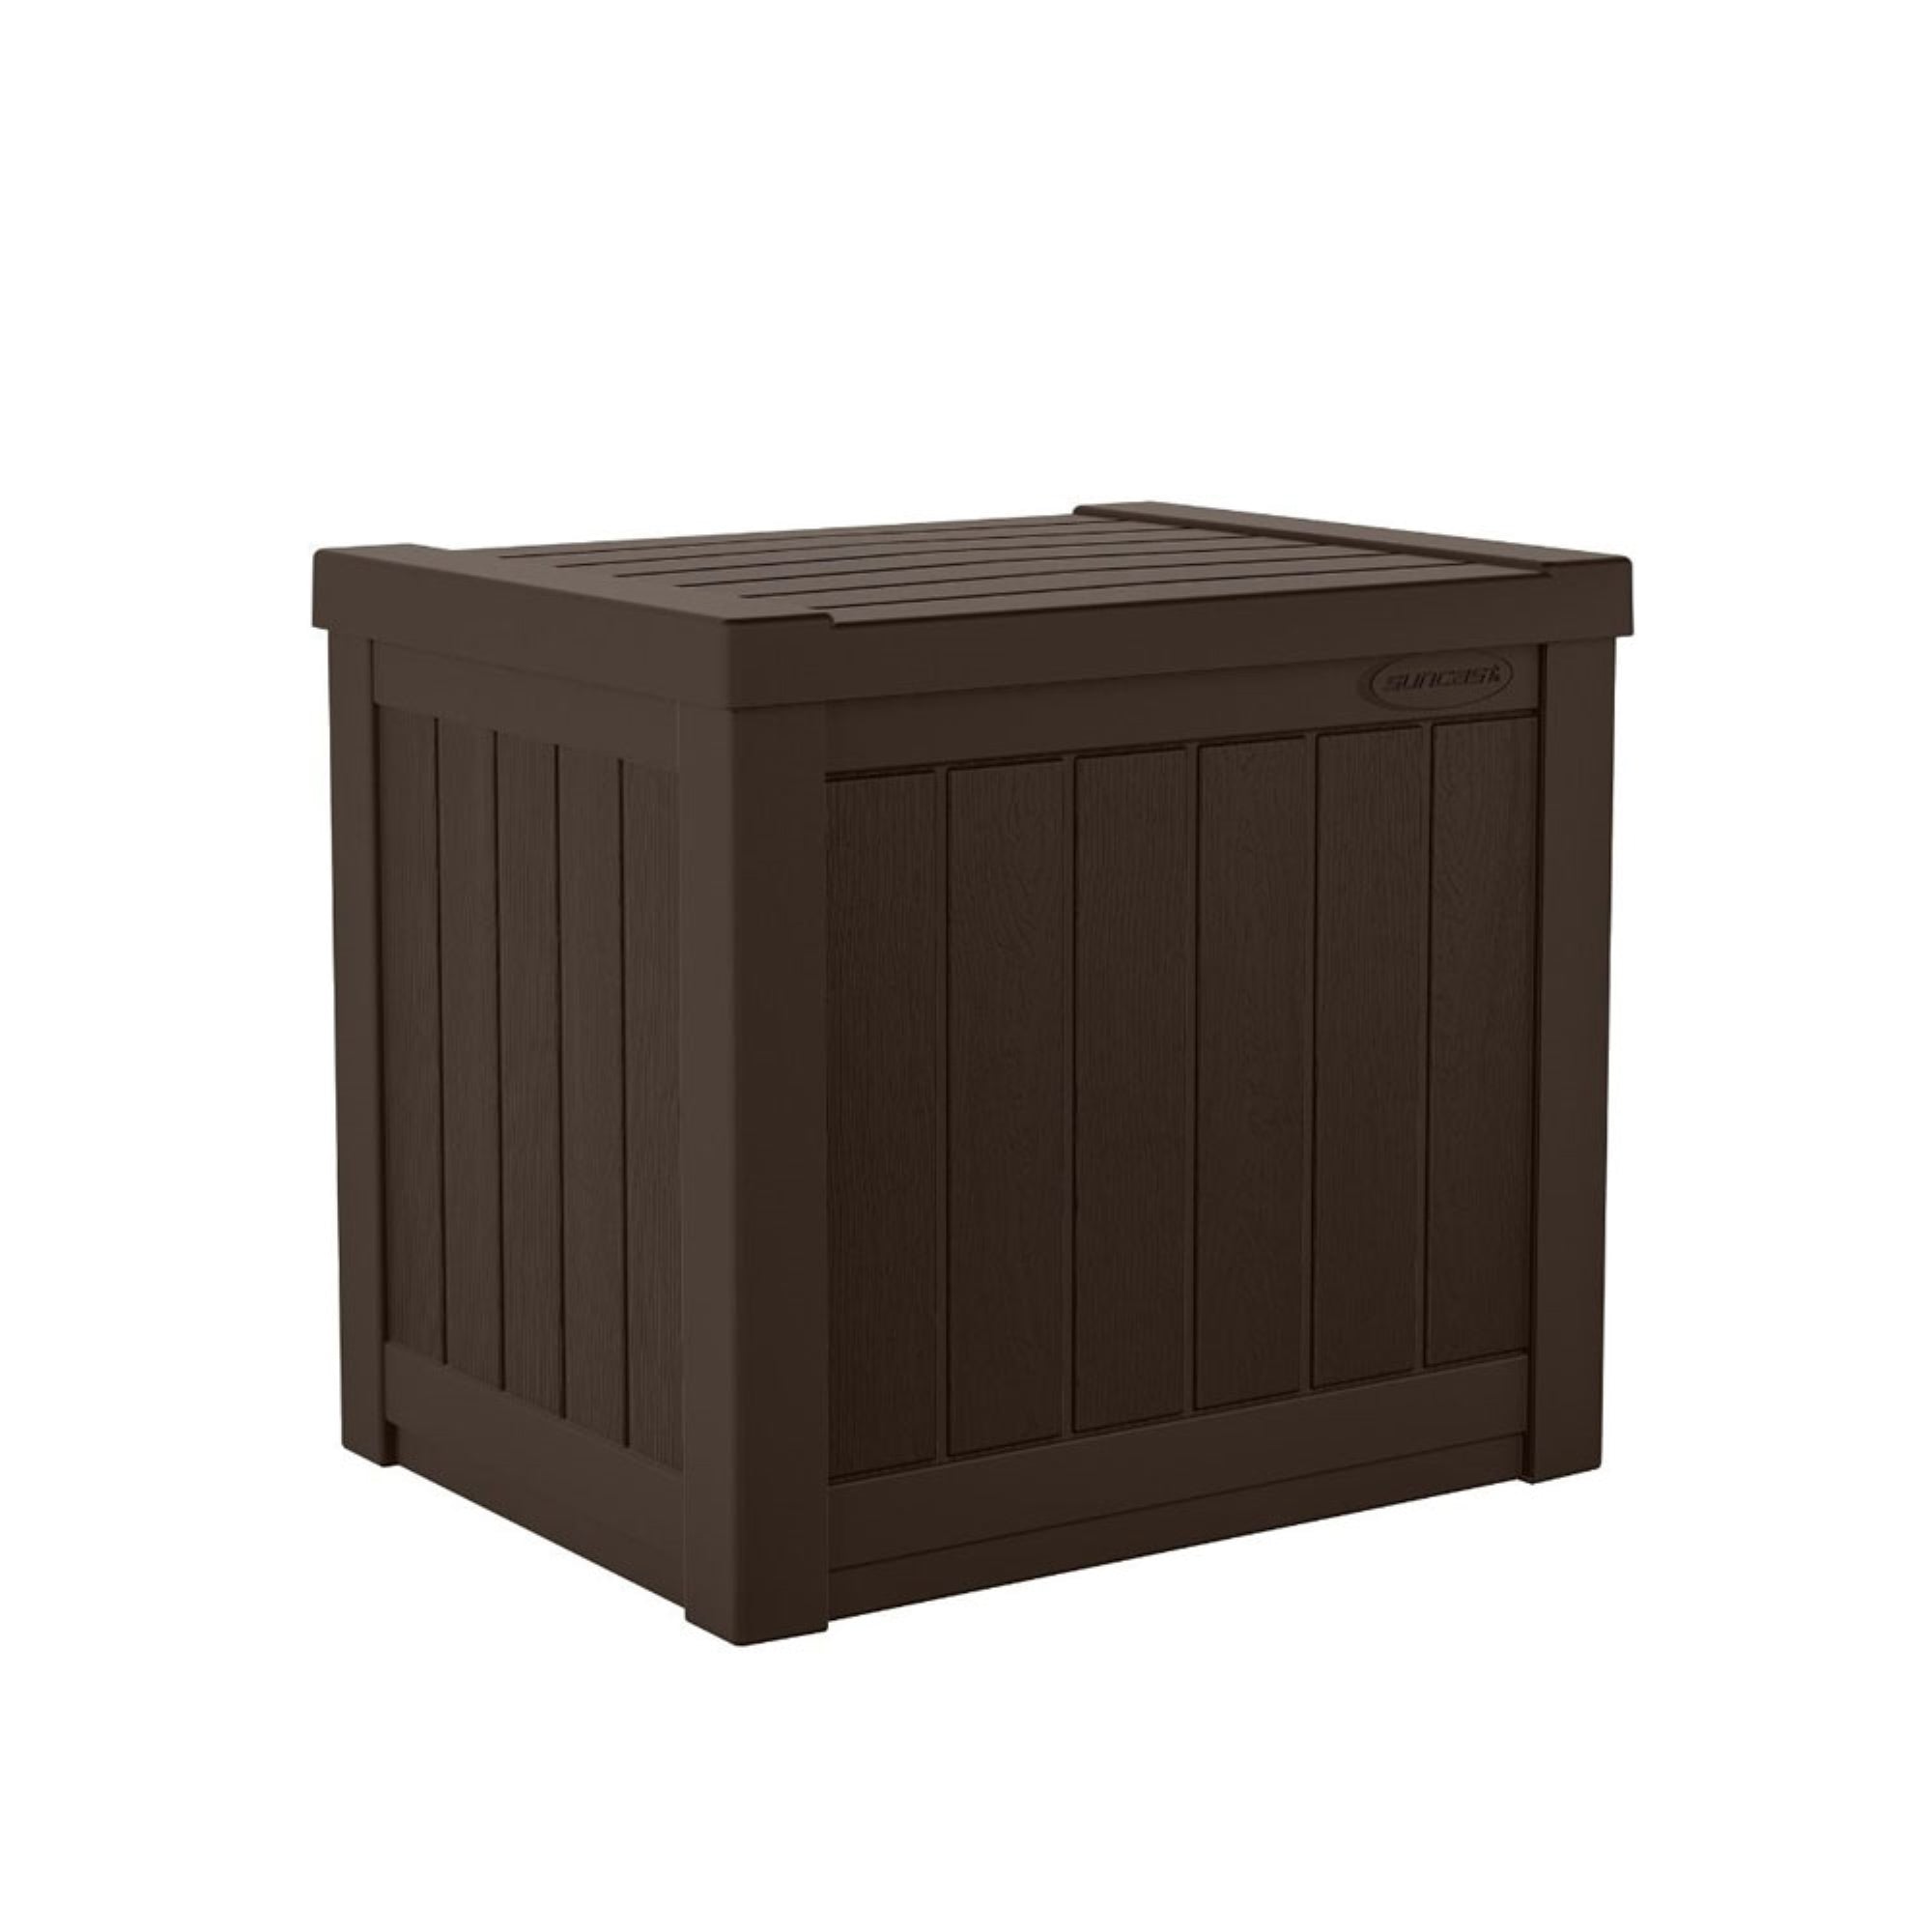 Suncast-SS500J-22-Gallon-Indoor-Outdoor-Resin-Patio-Storage-Chest-Deck-Box,-Java-Outdoor-Storage-Boxes